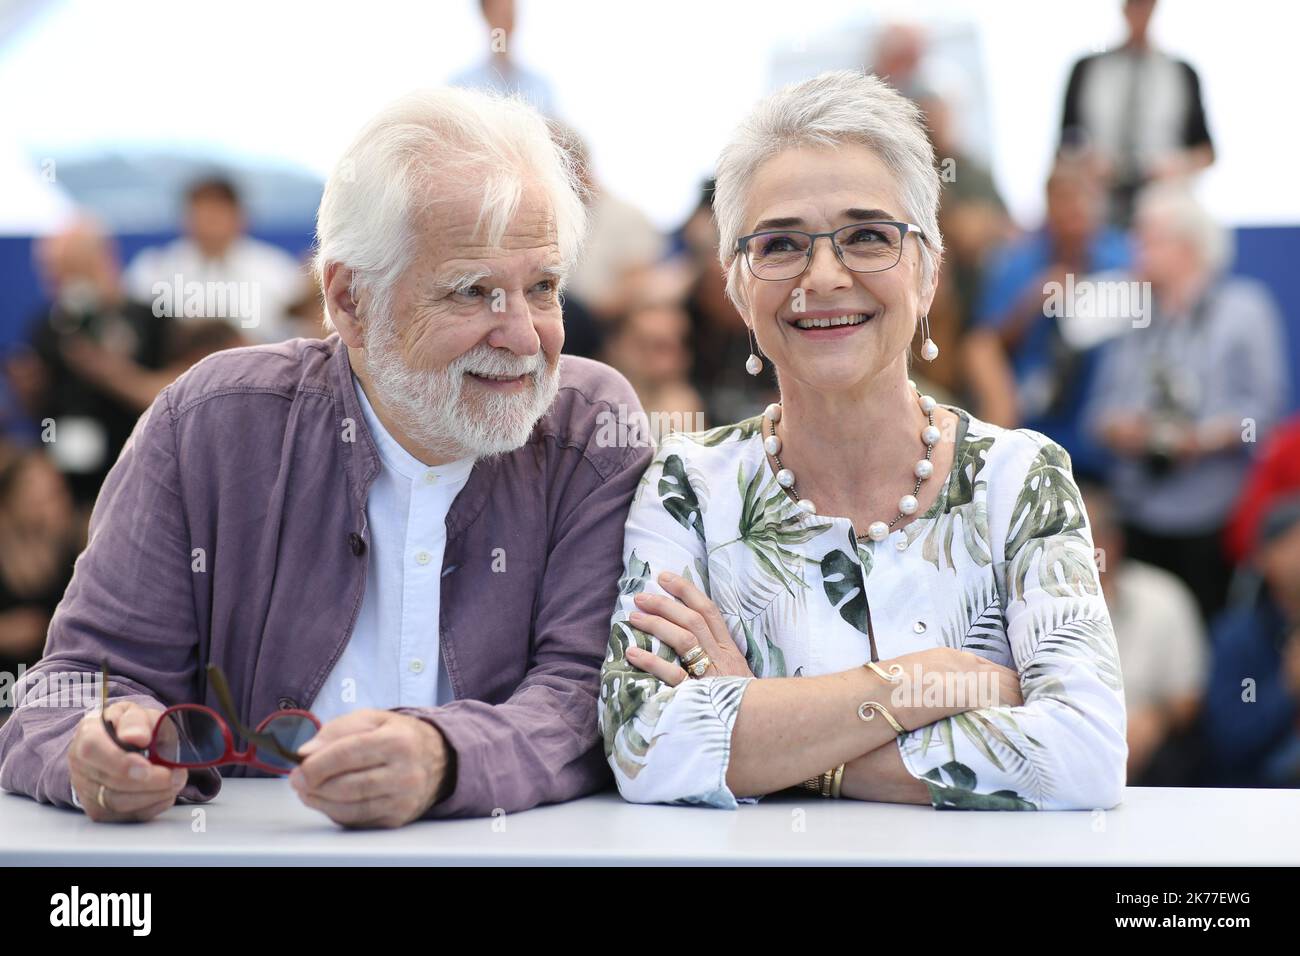 Jan Harlan et Katharina Kubrik assistent au Shining Photocall, lors du Festival de Cannes 72nd Banque D'Images